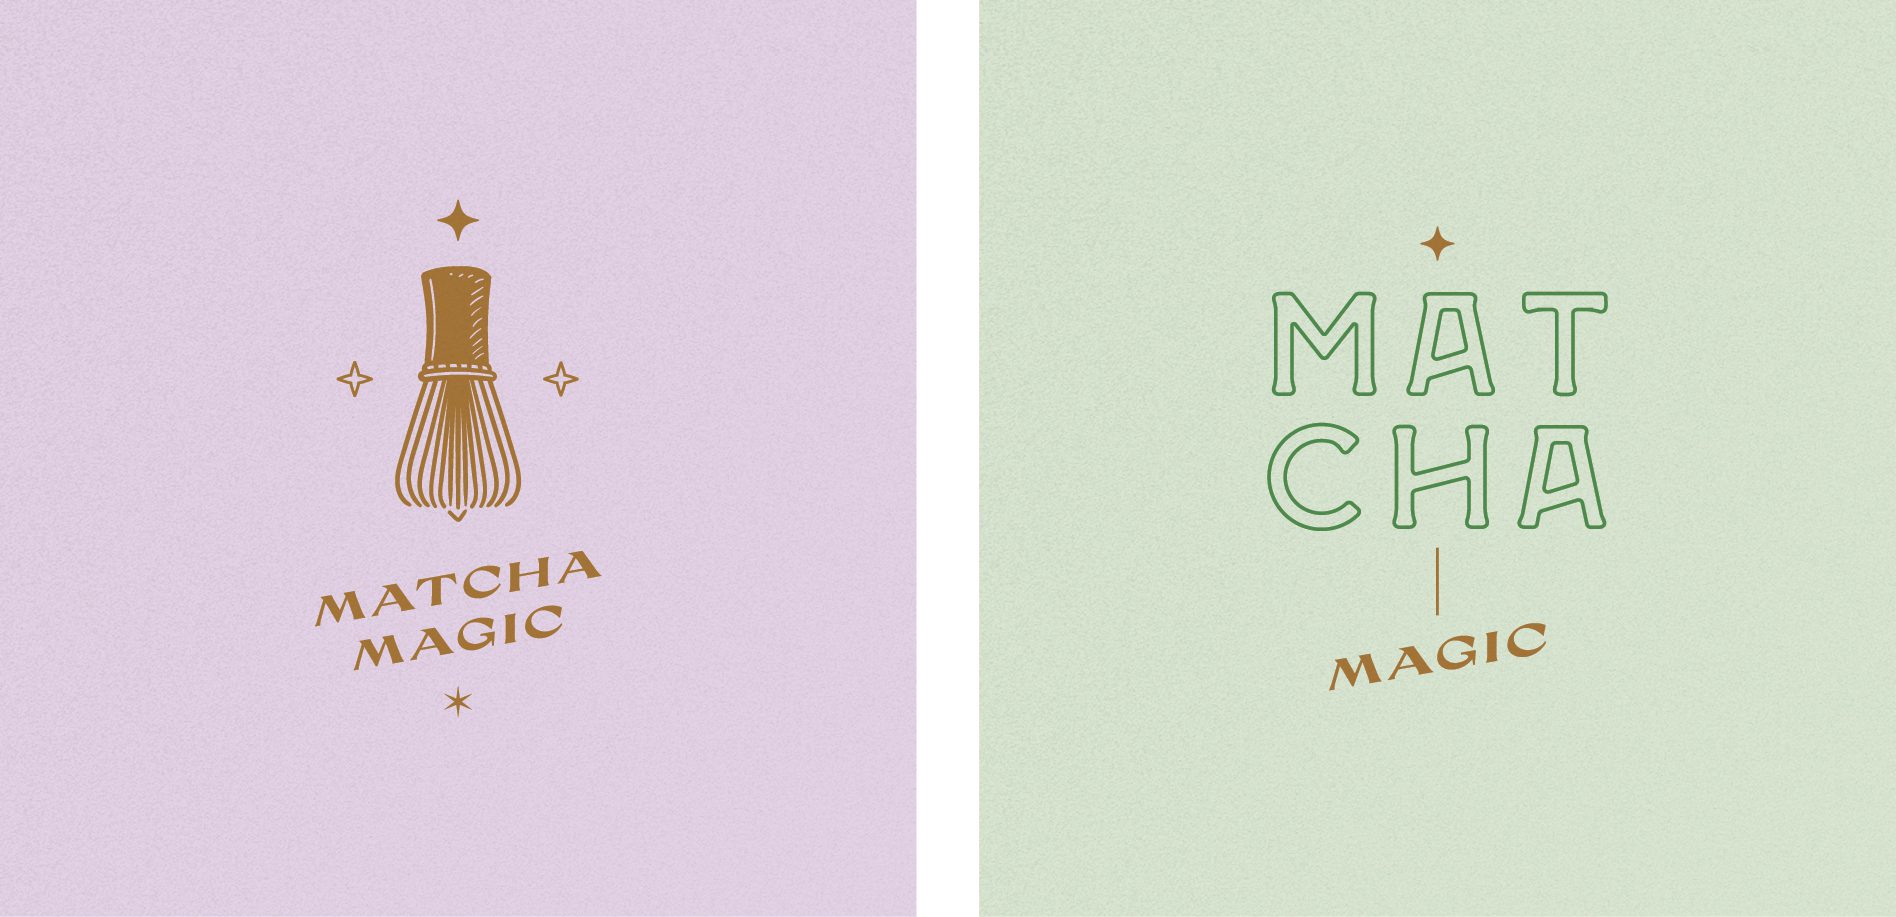 Matcha Magic Cafe - LOGO Restaurant Branding